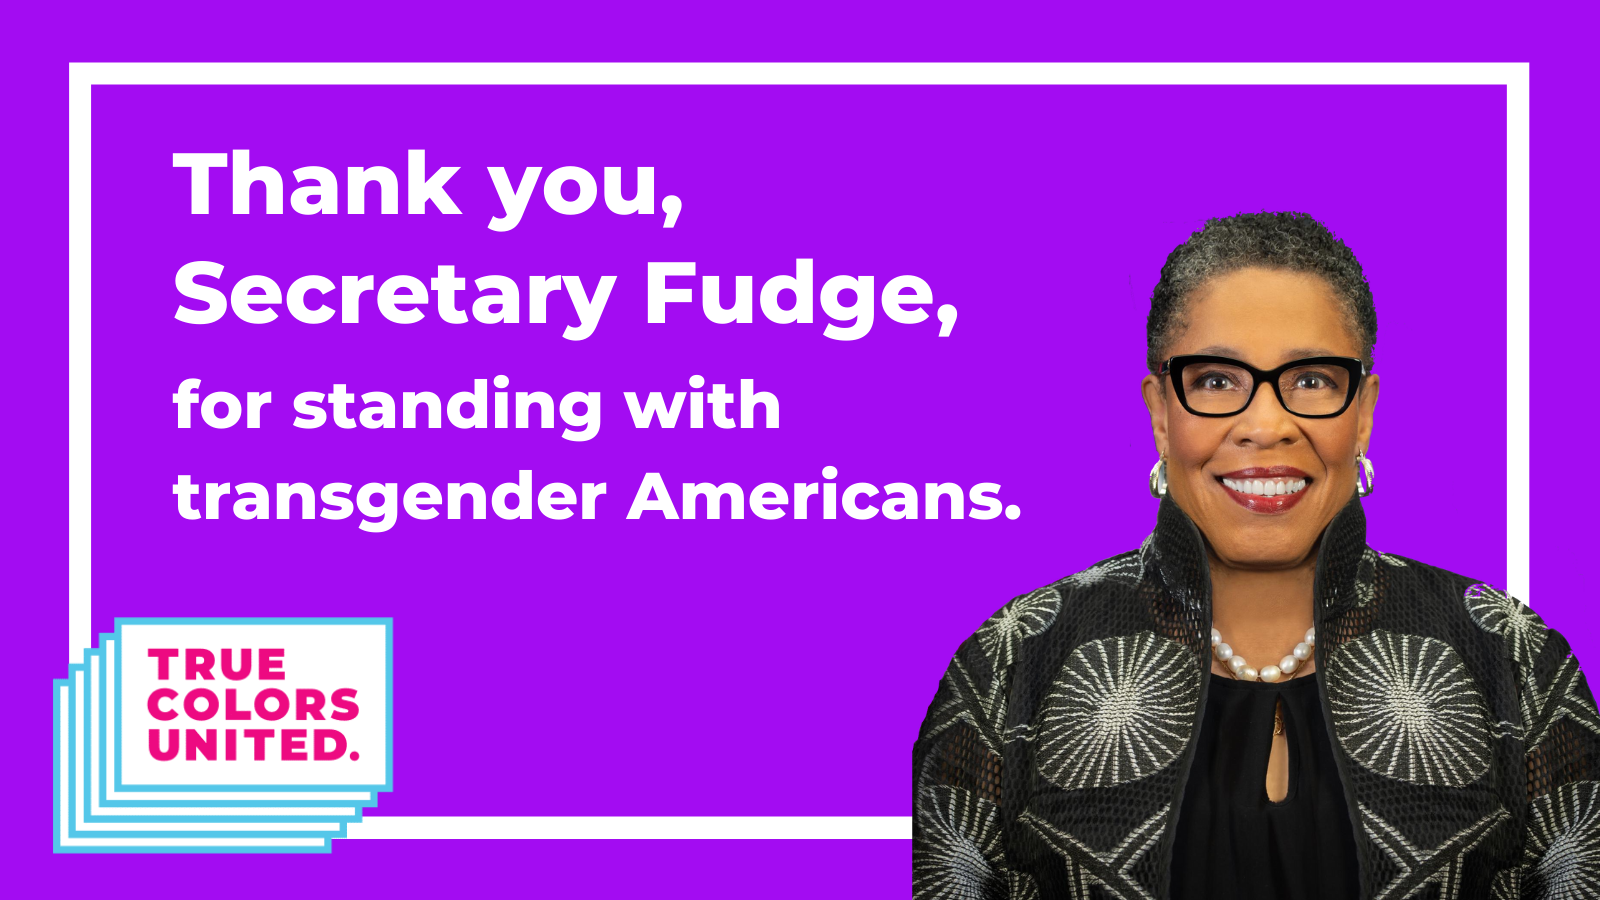 Thank you Secretary Fudge